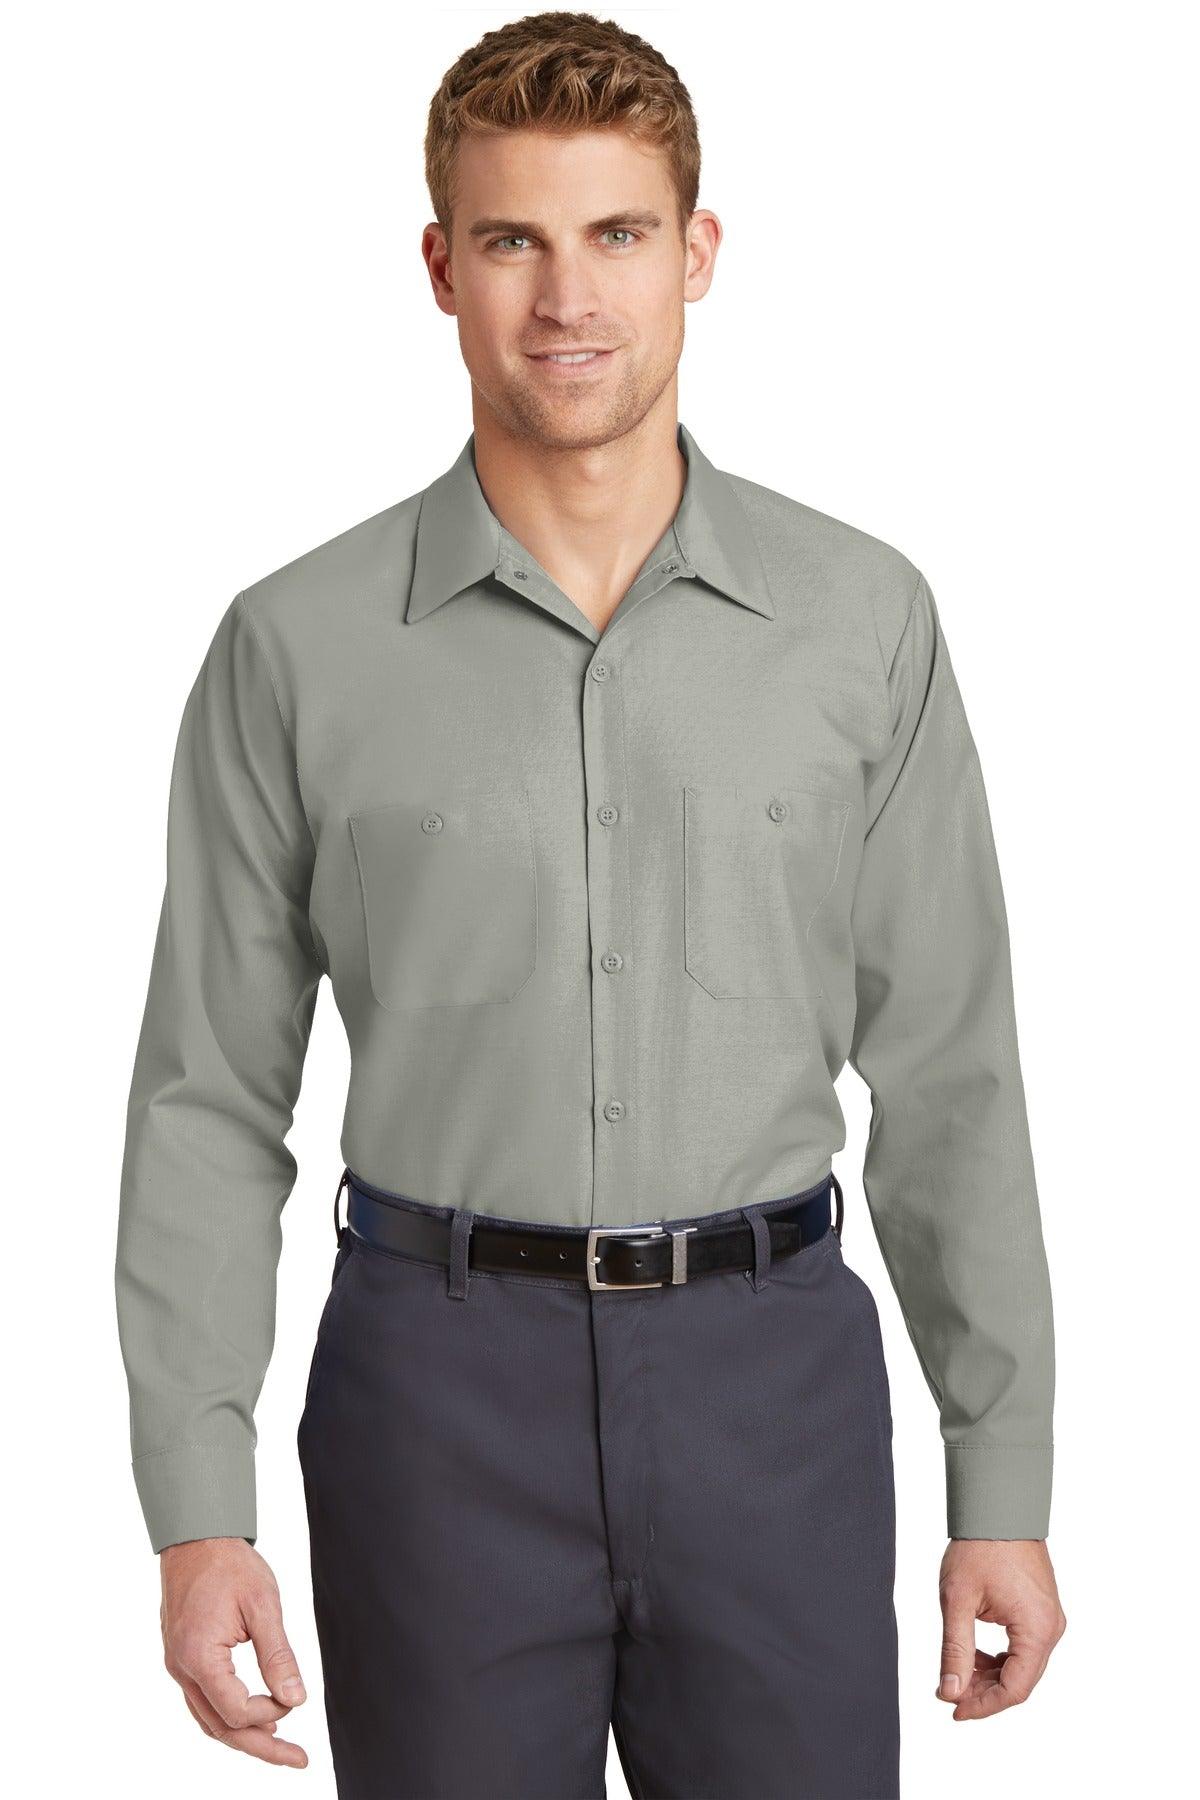 Red Kap Long Sleeve Industrial Work Shirt. SP14 - Dresses Max